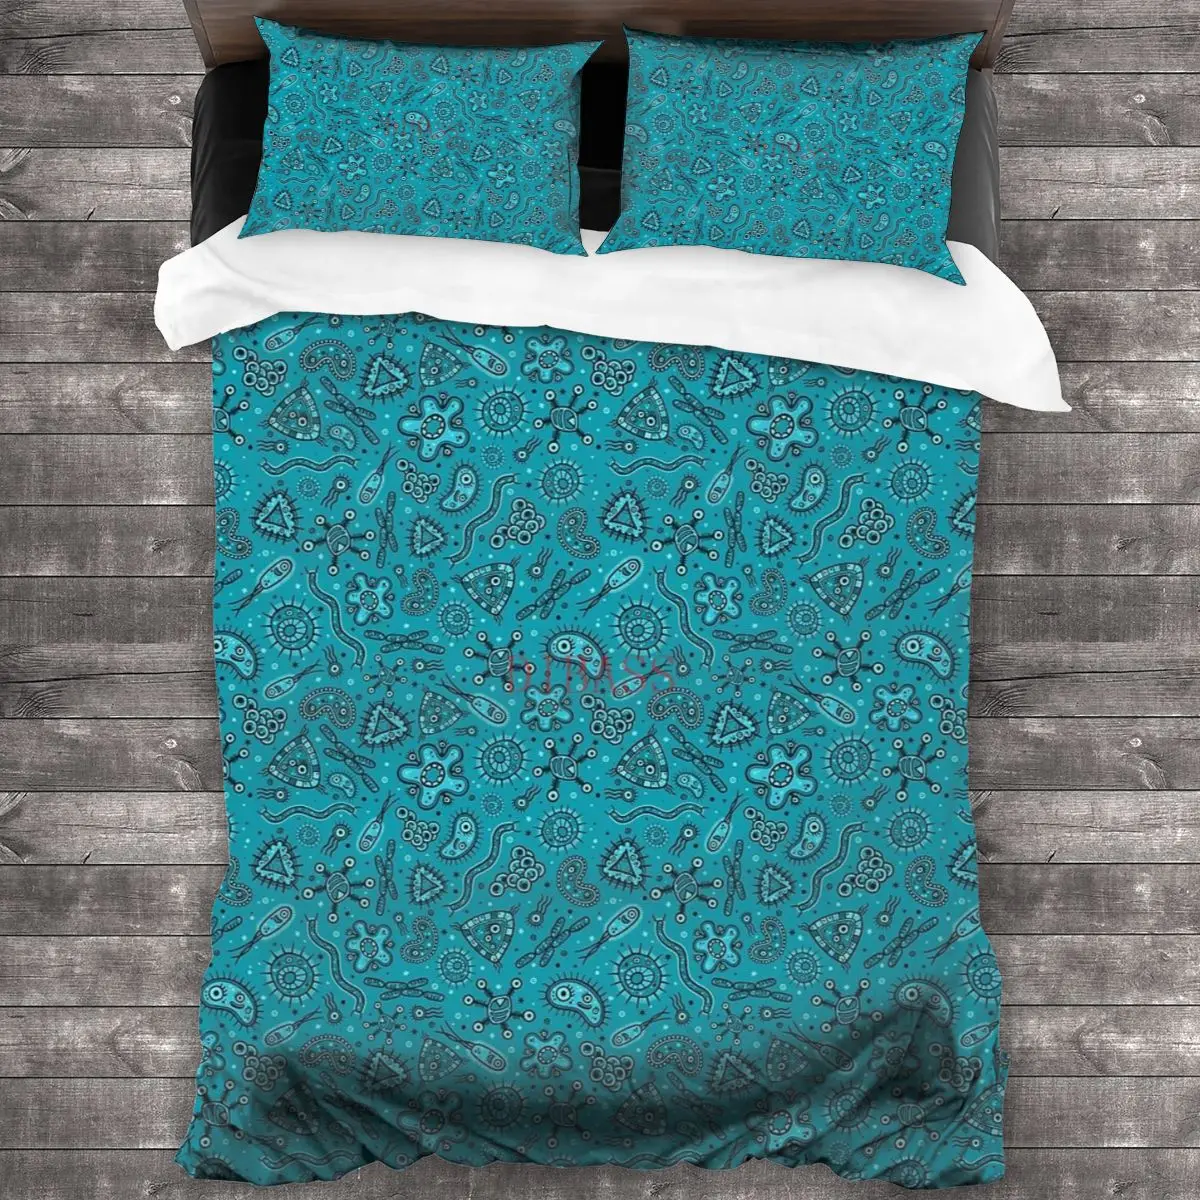 

Cartoon Microbes - Teal 100%Pure Cotton Comforter Set with 2 Pillowcase,Soft Microfiber Duvet Cover Set, Bedding Sets Bed Set